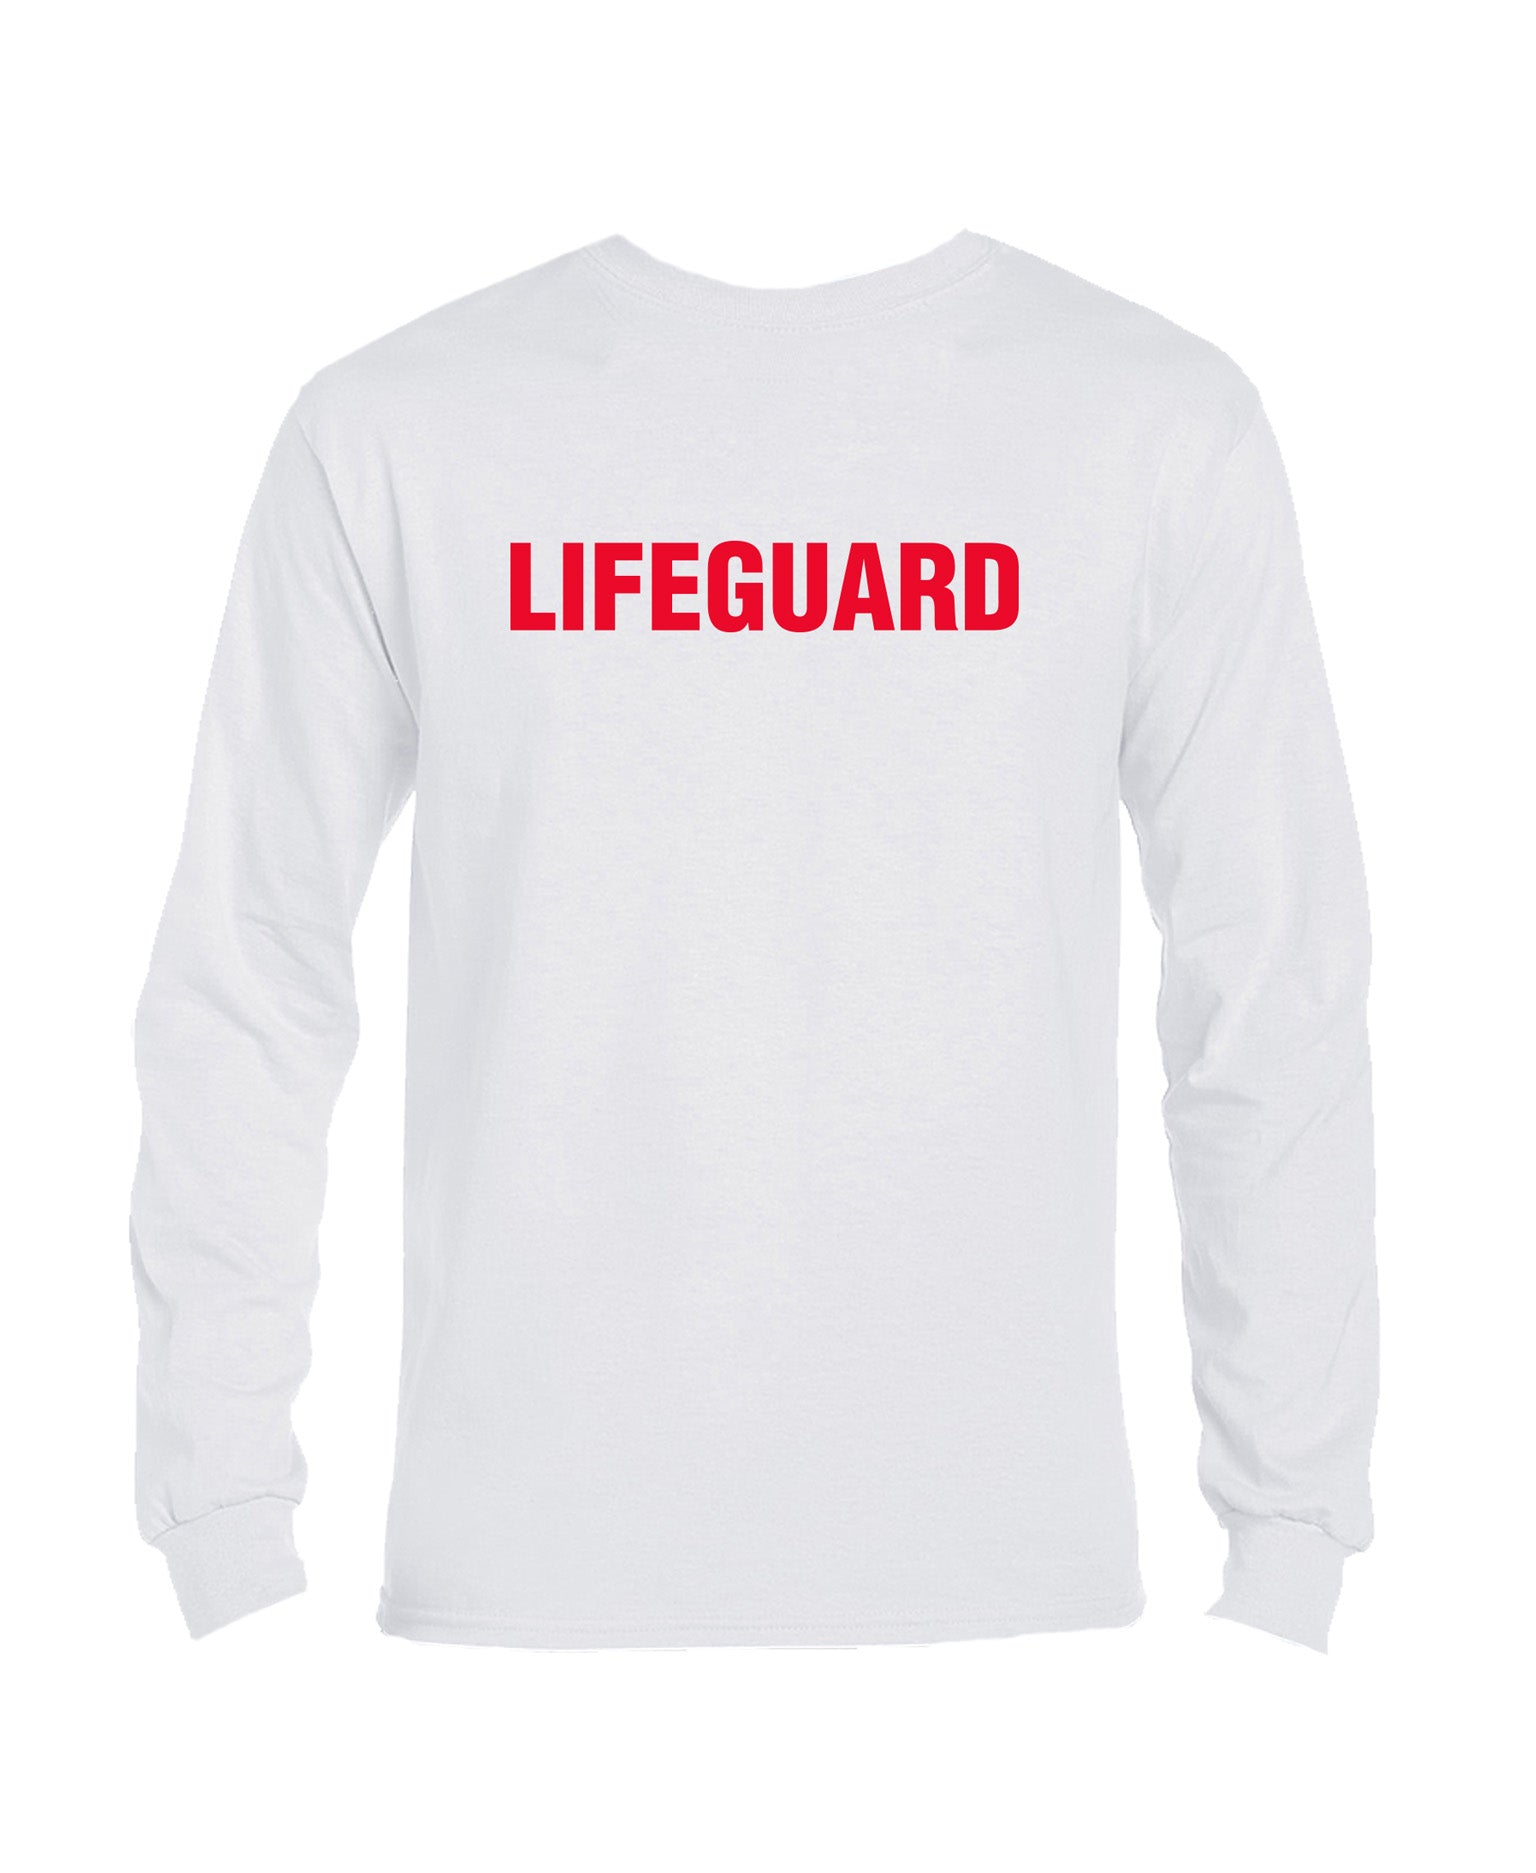 ¨Lifeguard¨ Long Sleeve T-Shirt - White